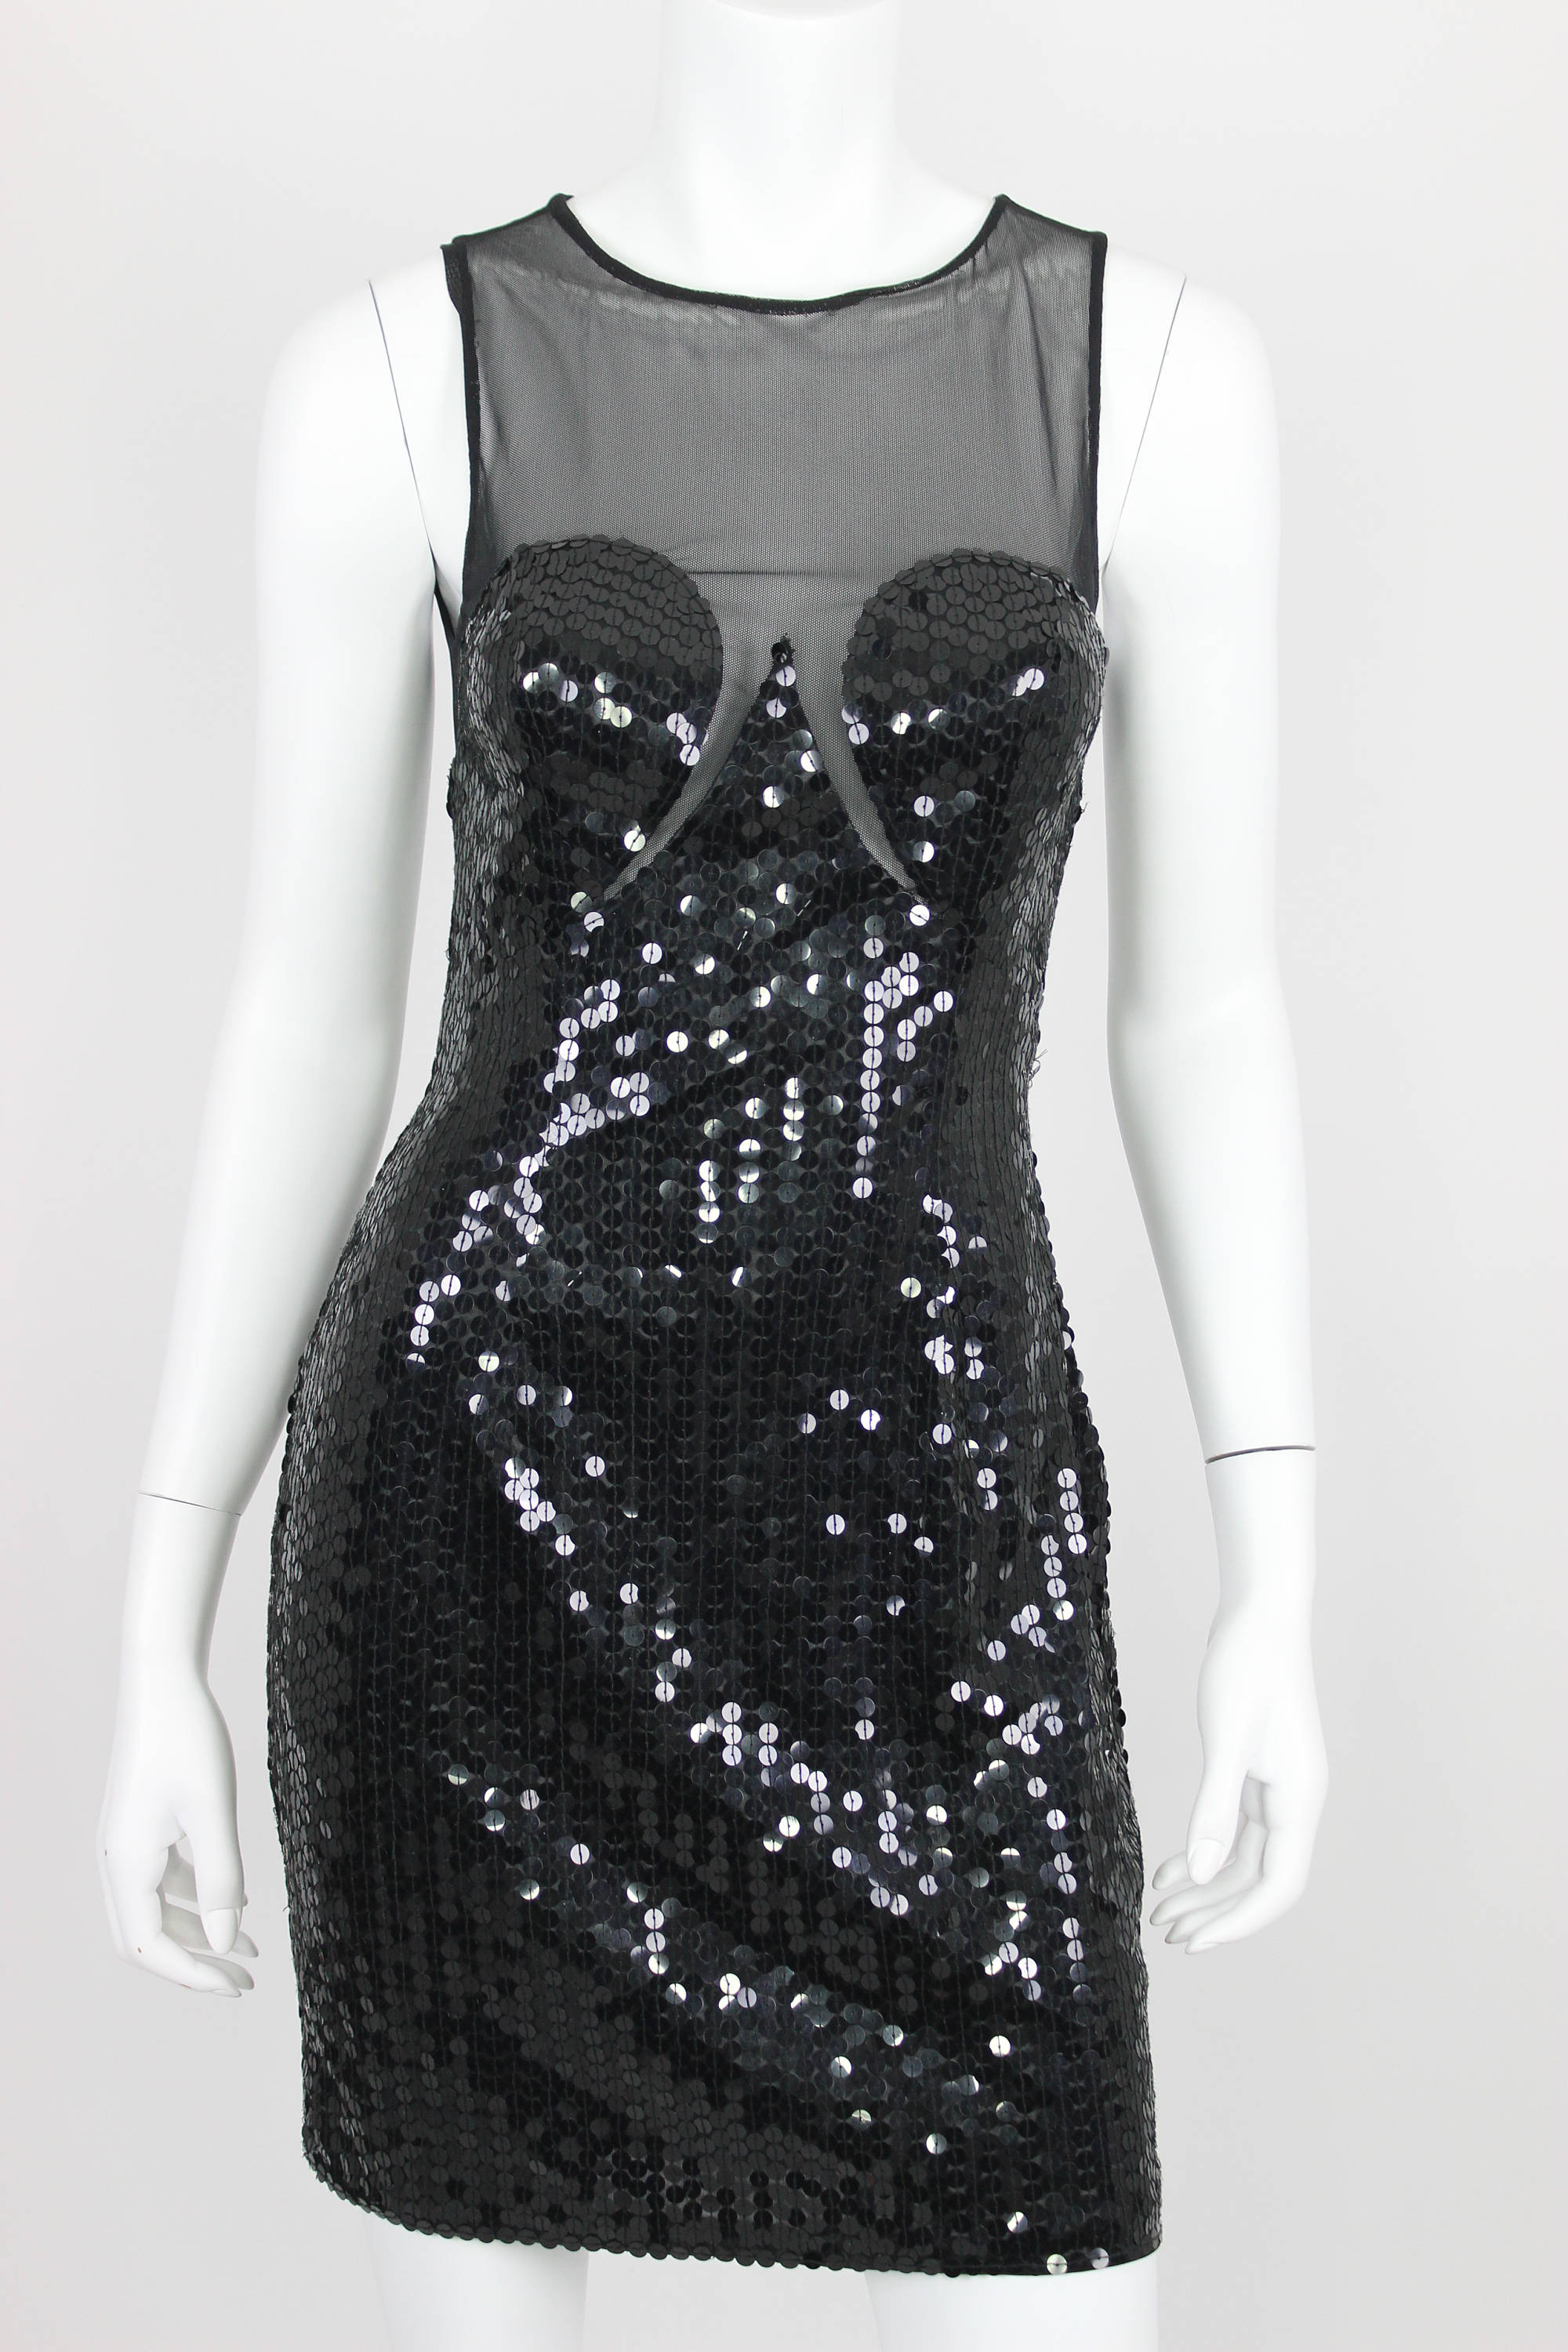 Vintage Sequin Dress Black Sheer Mesh Sleeveless Short Party - Etsy